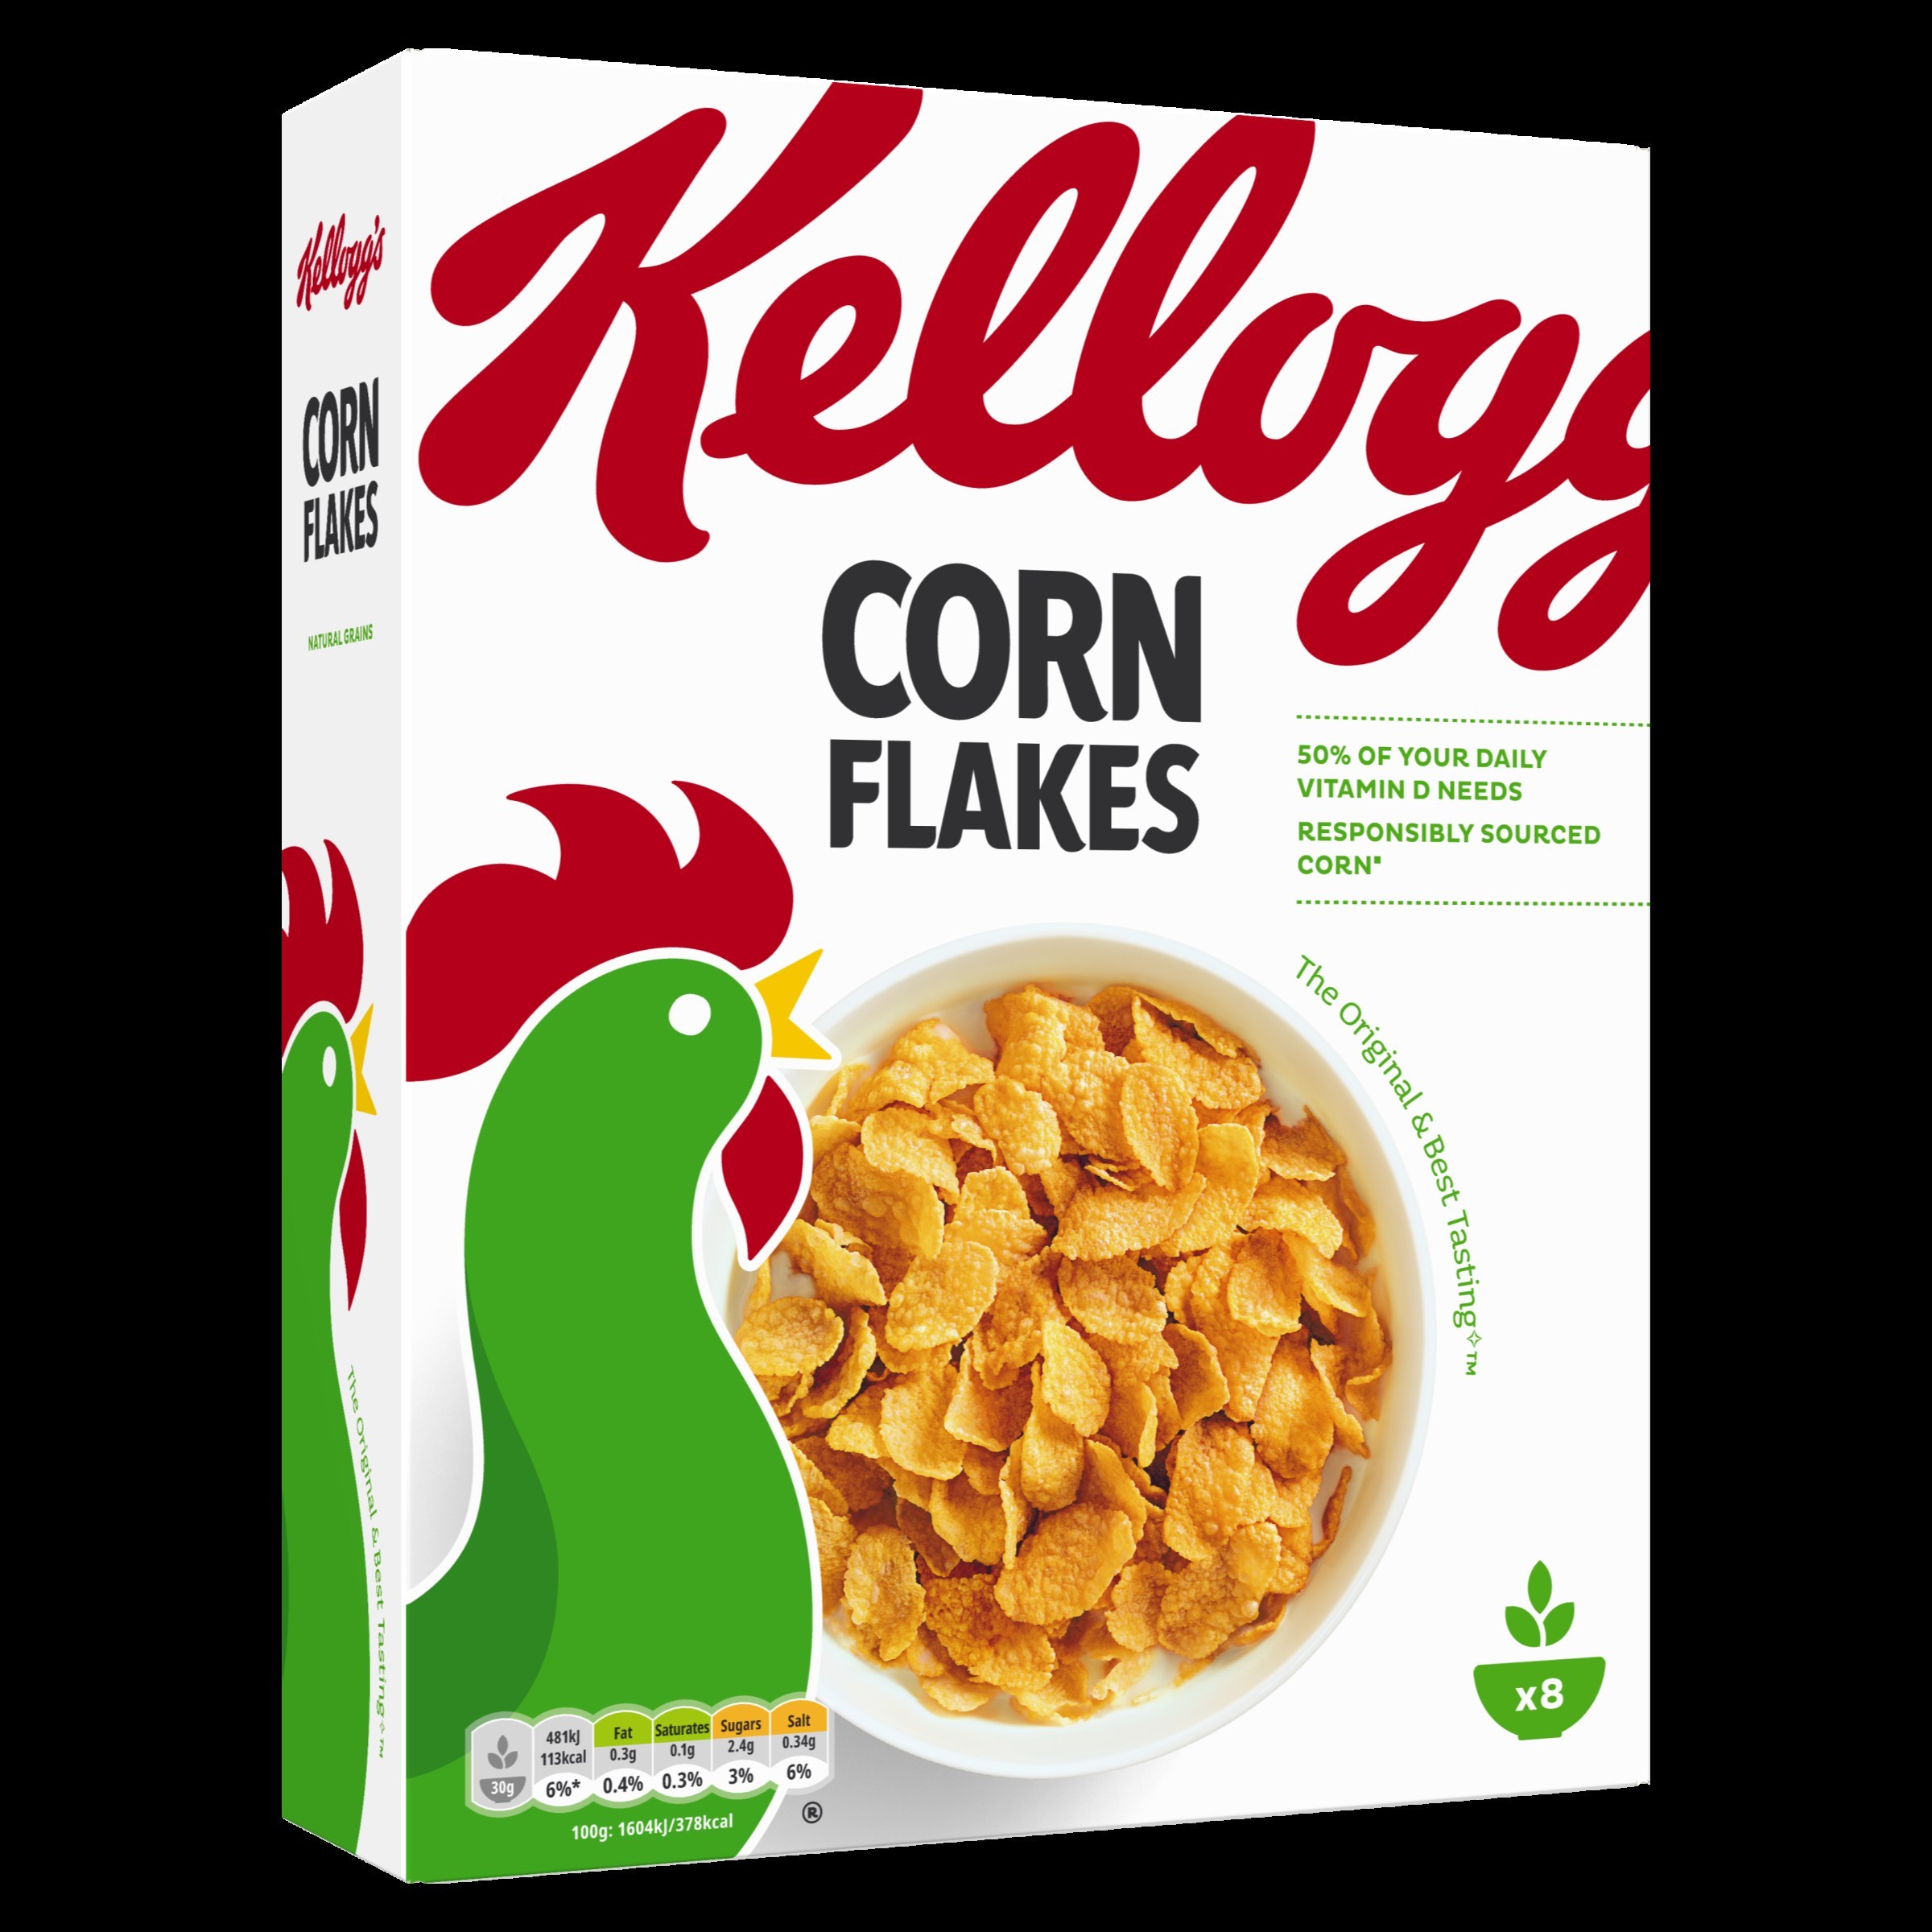 https://www.foodnavigator.com/var/wrbm_gb_food_pharma/storage/images/publications/food-beverage-nutrition/foodnavigator.com/news/business/kellogg-s-moves-to-responsibly-sourced-corn-flakes/9395865-1-eng-GB/Kellogg-s-moves-to-responsibly-sourced-Corn-Flakes.jpg